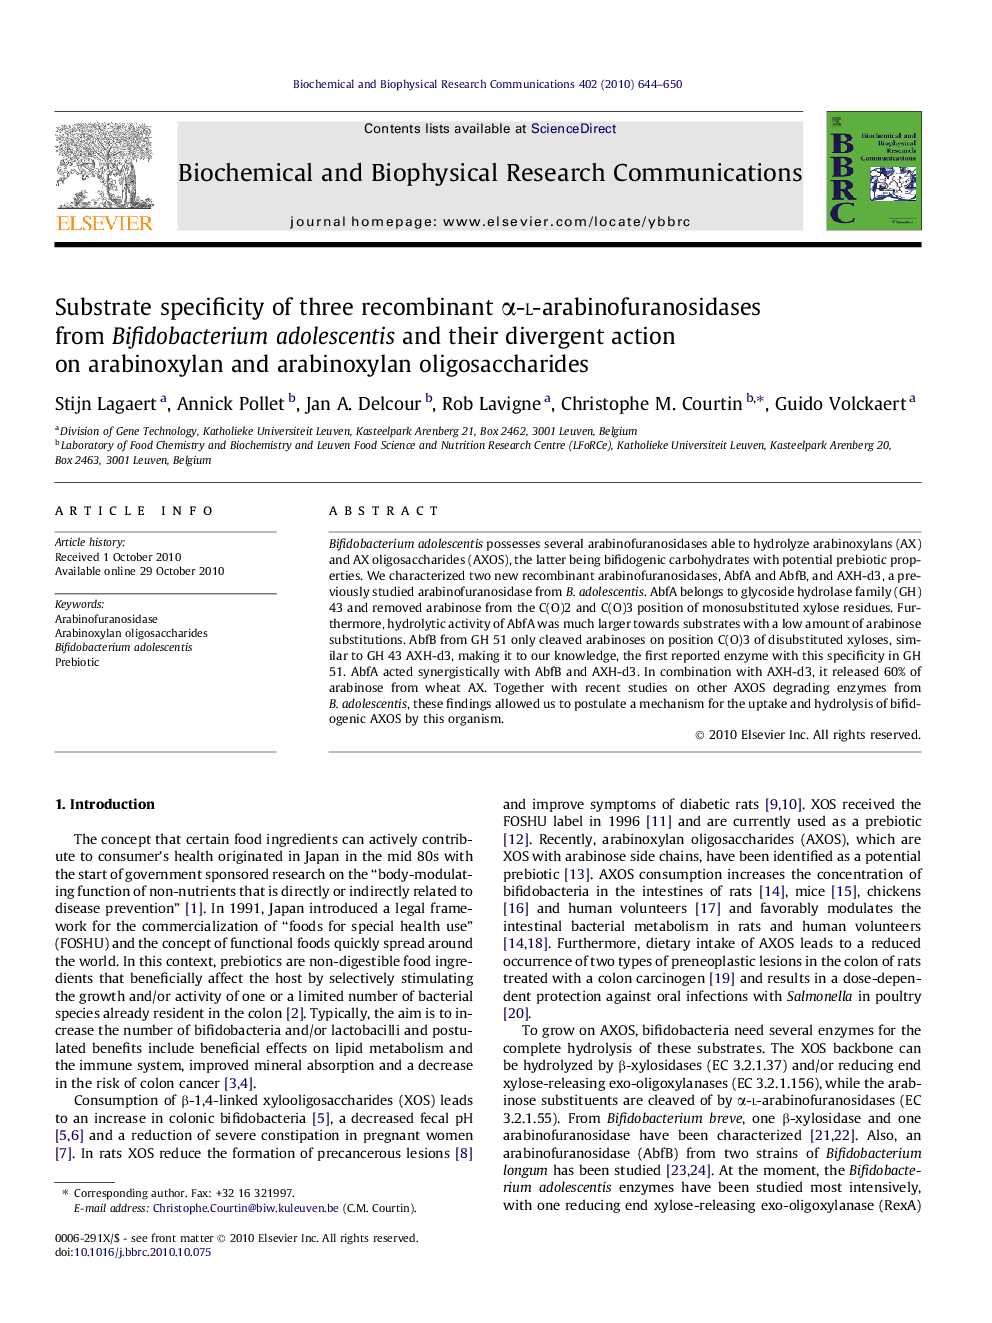 Substrate specificity of three recombinant α-l-arabinofuranosidases from Bifidobacterium adolescentis and their divergent action on arabinoxylan and arabinoxylan oligosaccharides